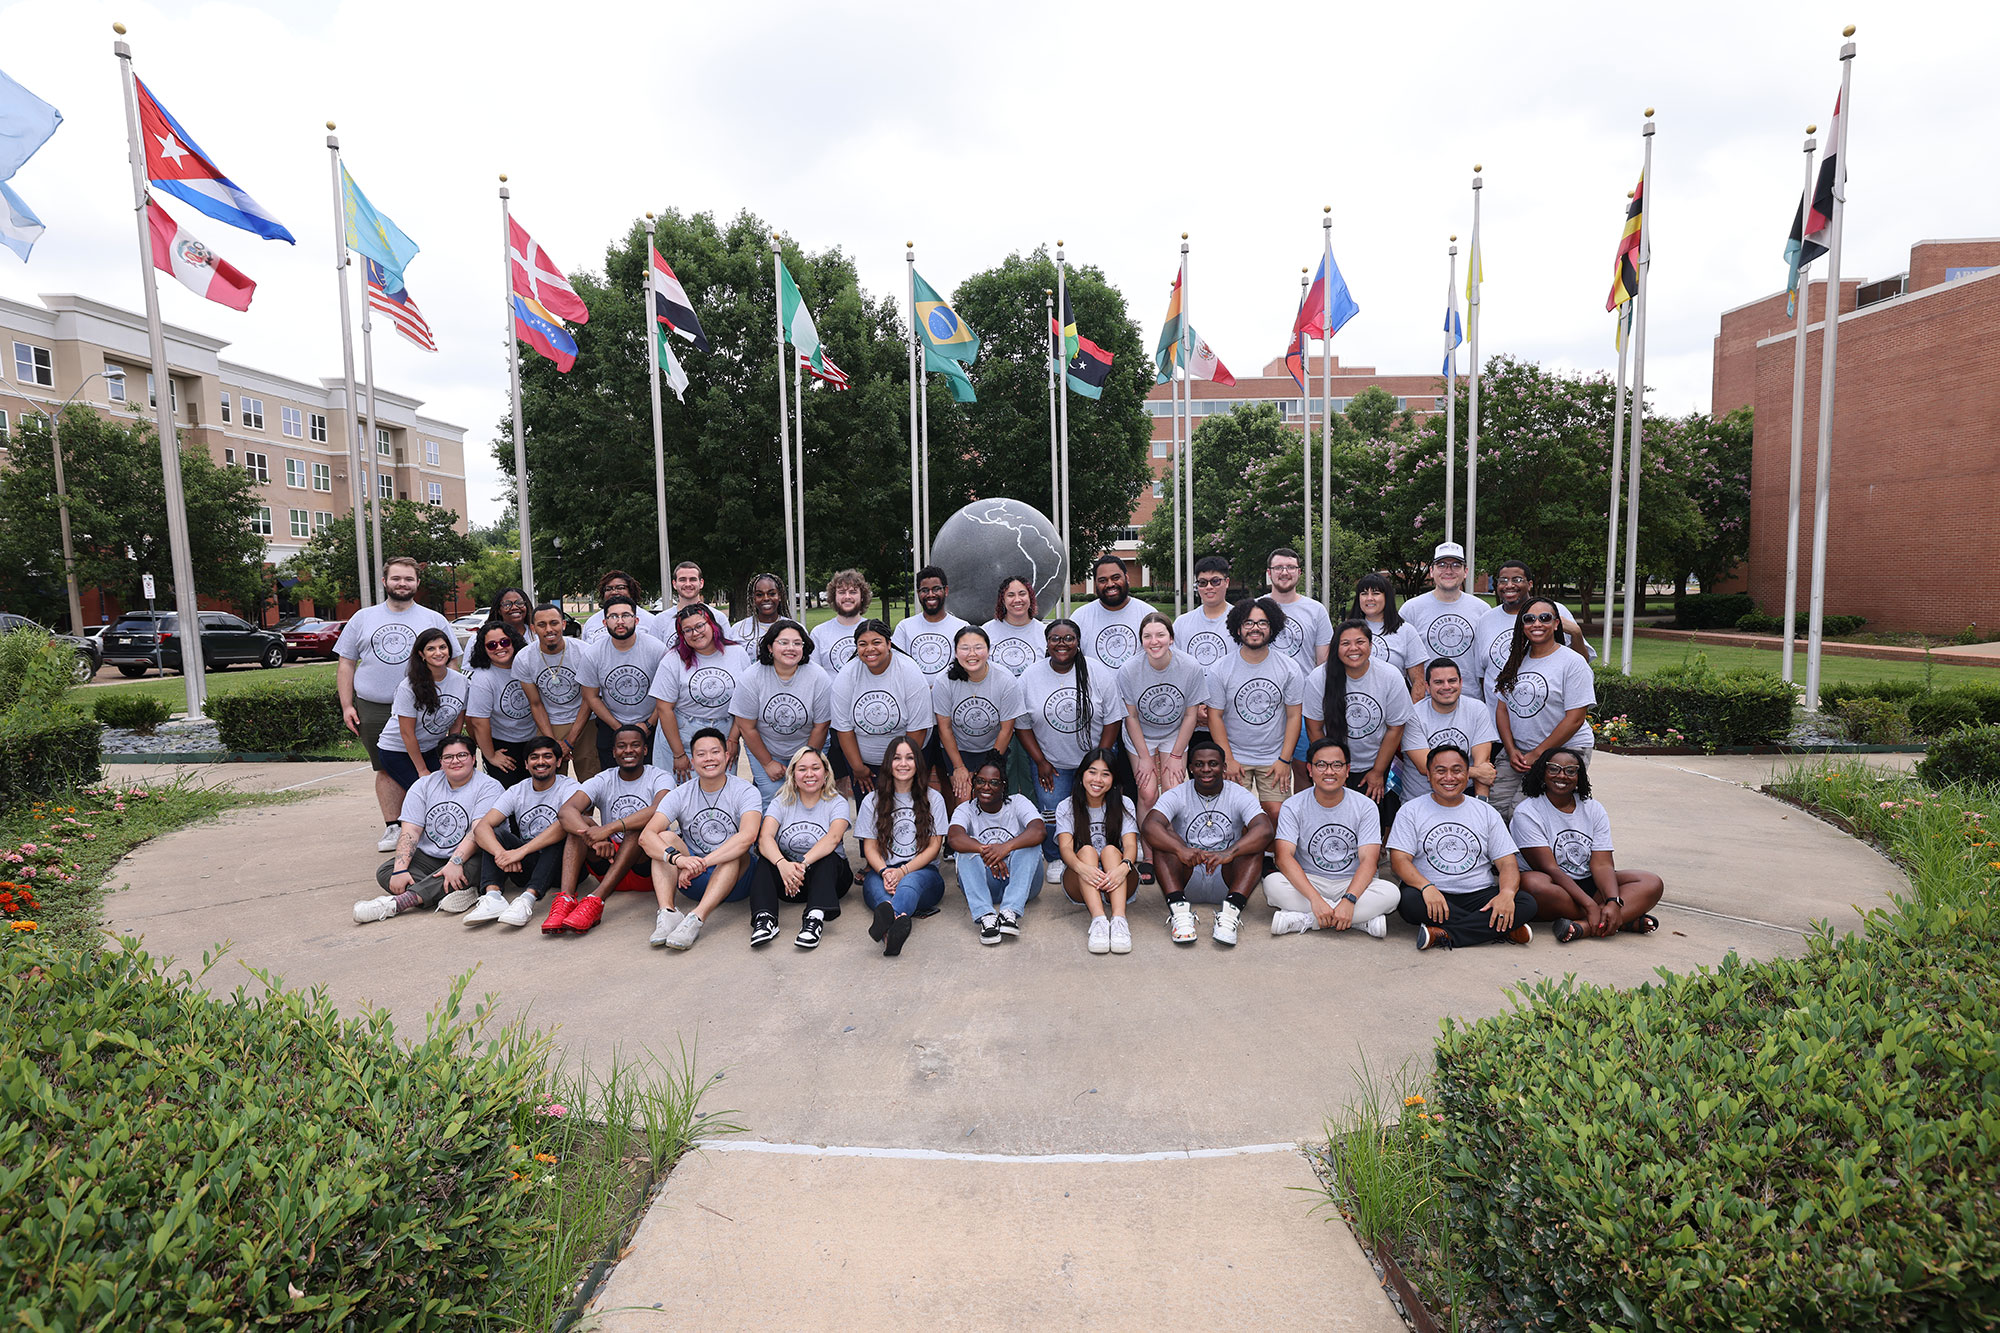 Members of the National Association of Student Personnel Administrators (NASPA) Undergraduate Fellowship program